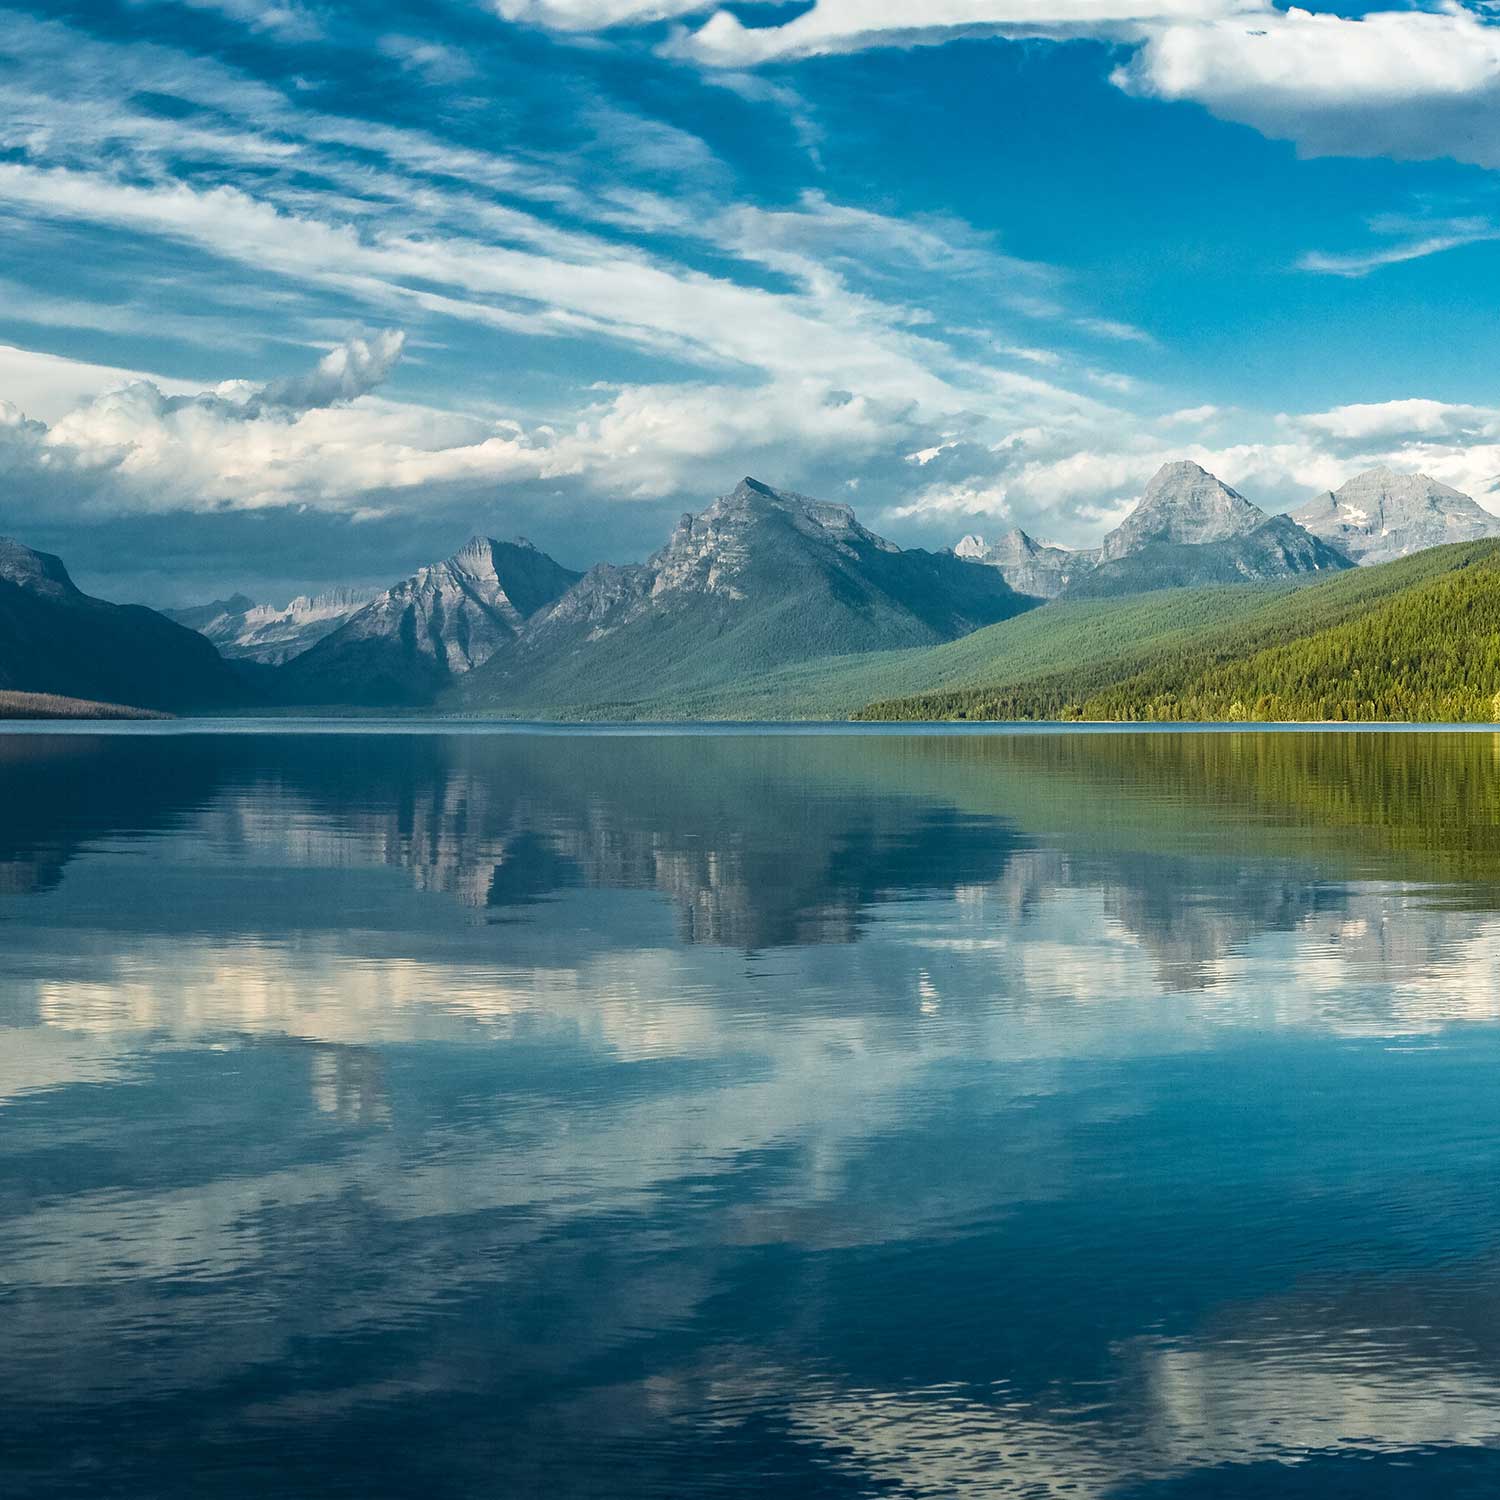 Montana nature scene with lake and mountains